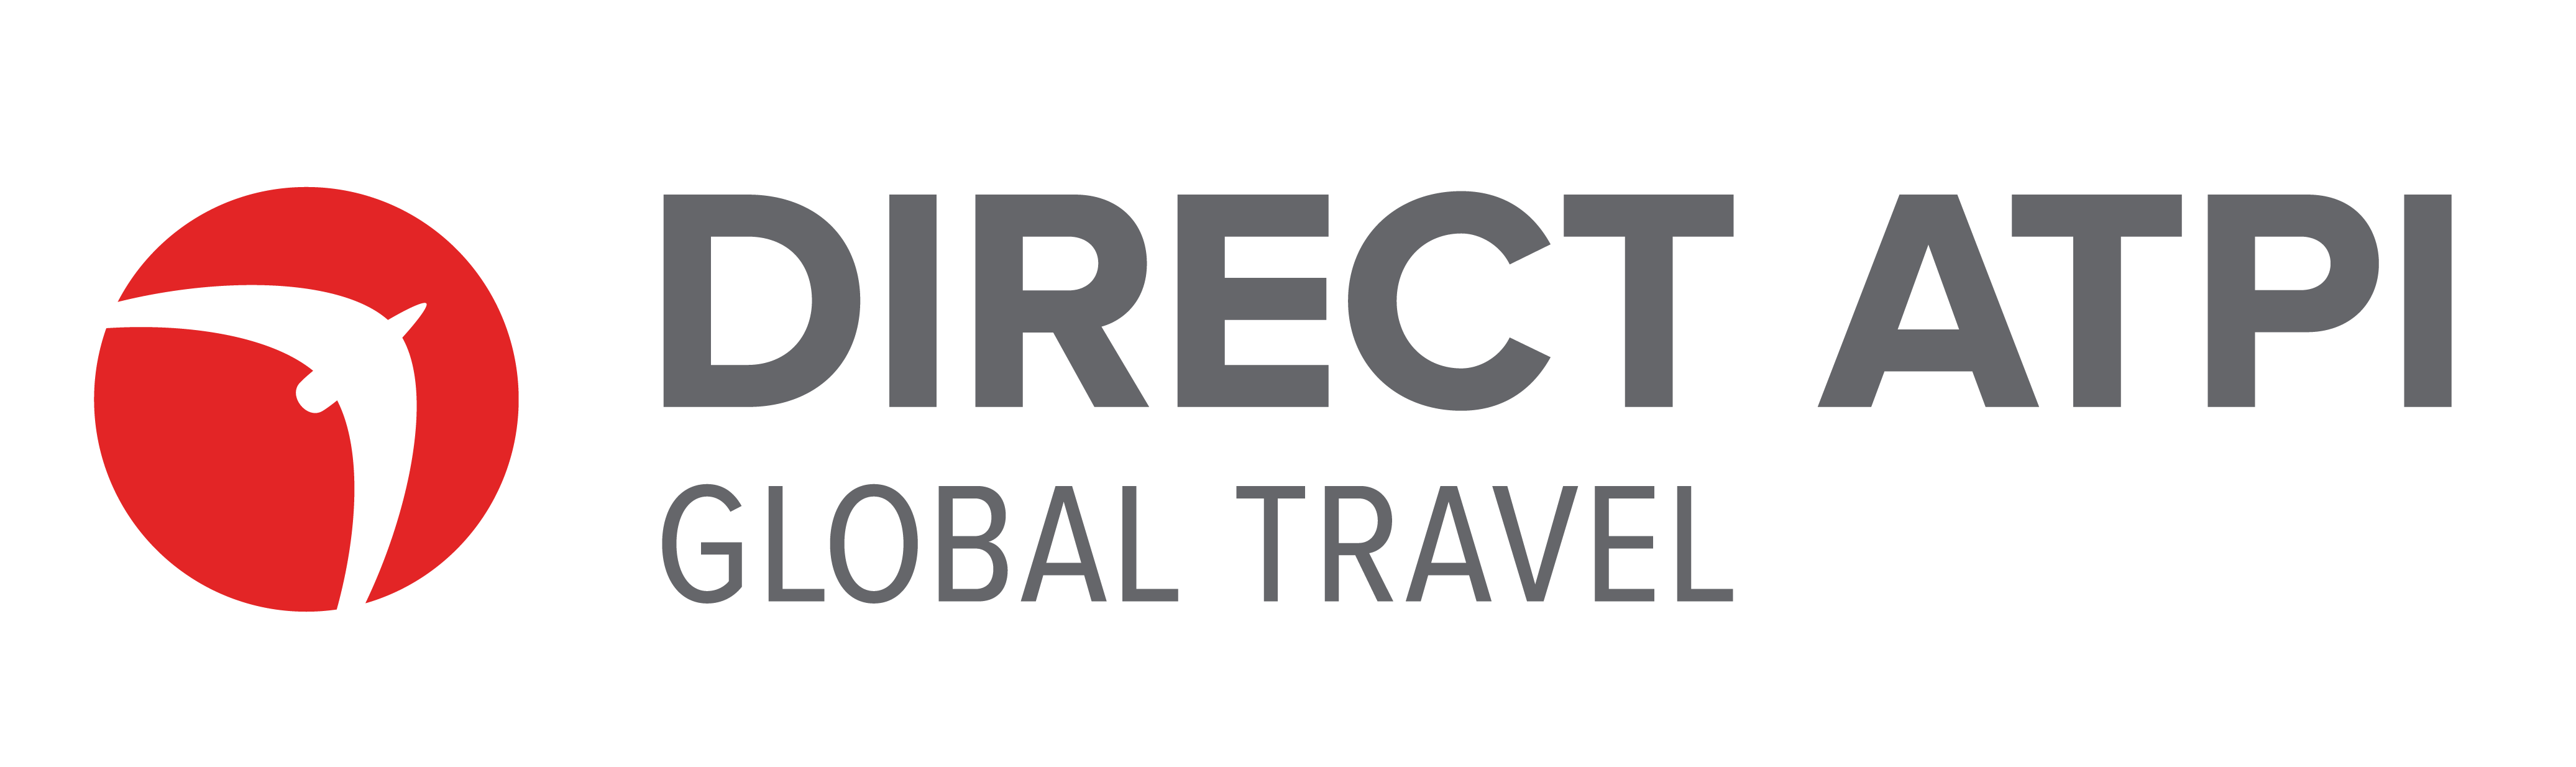 direct travel abry